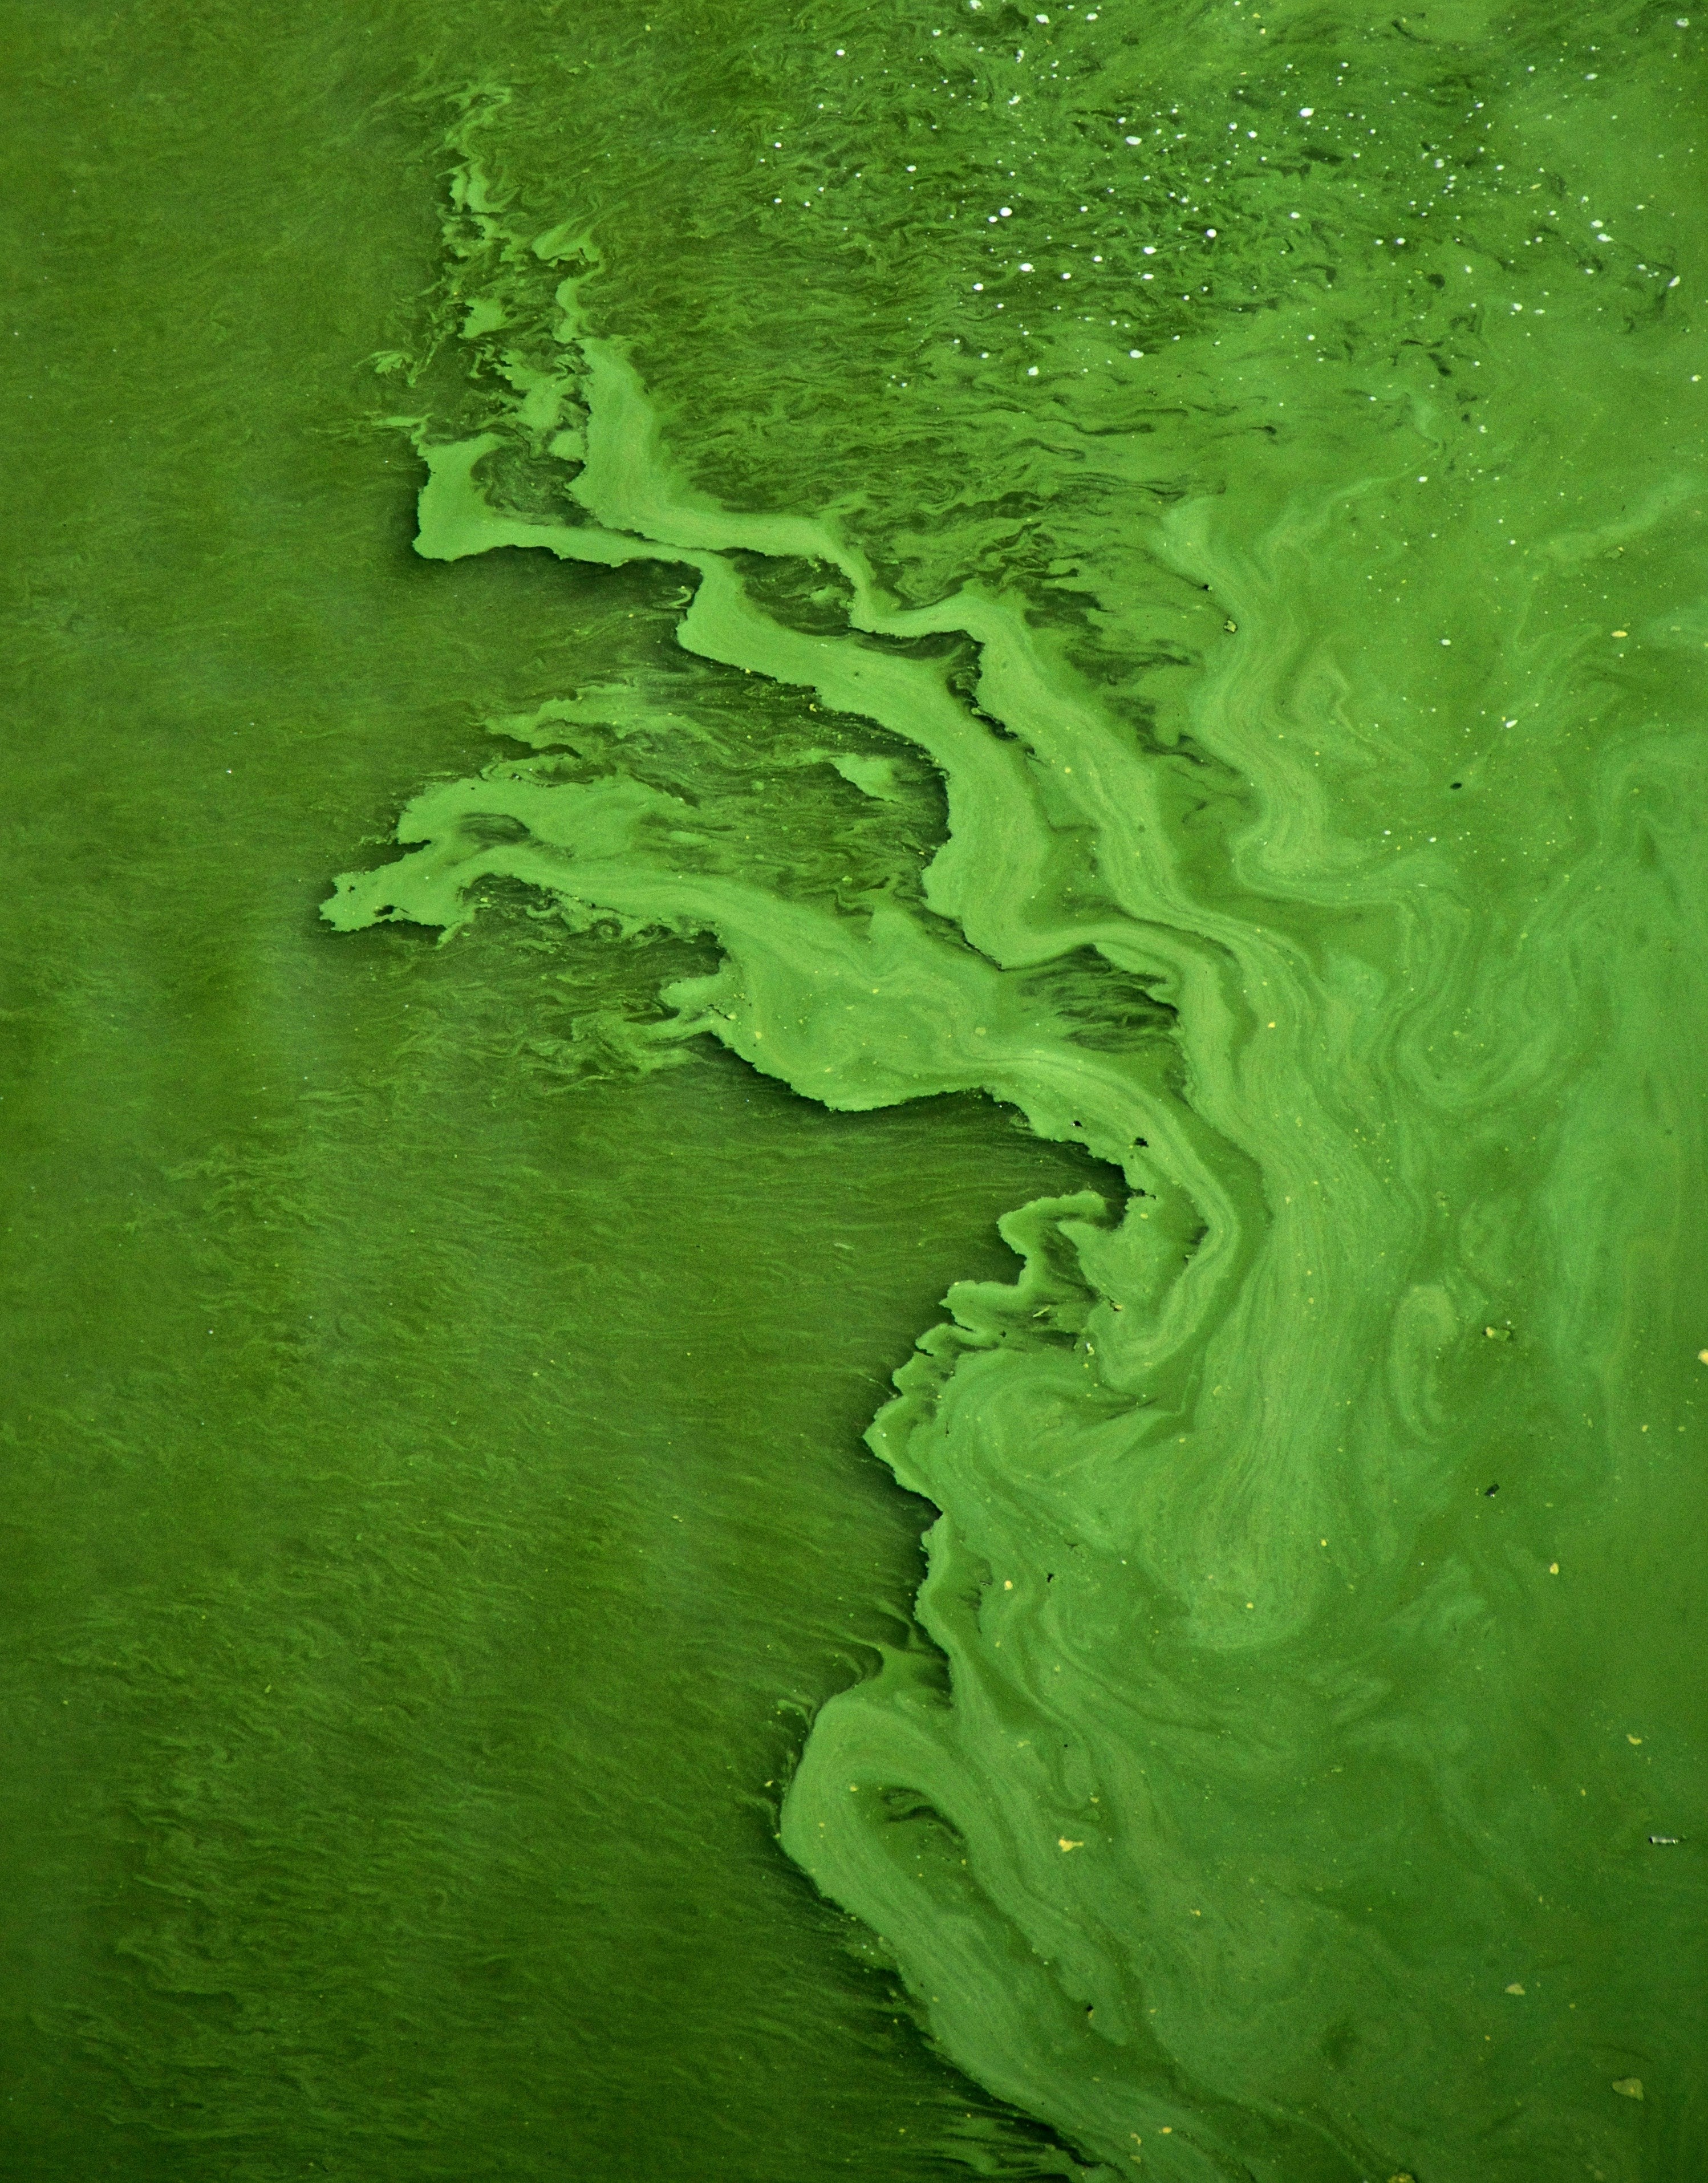 Green swirling algae